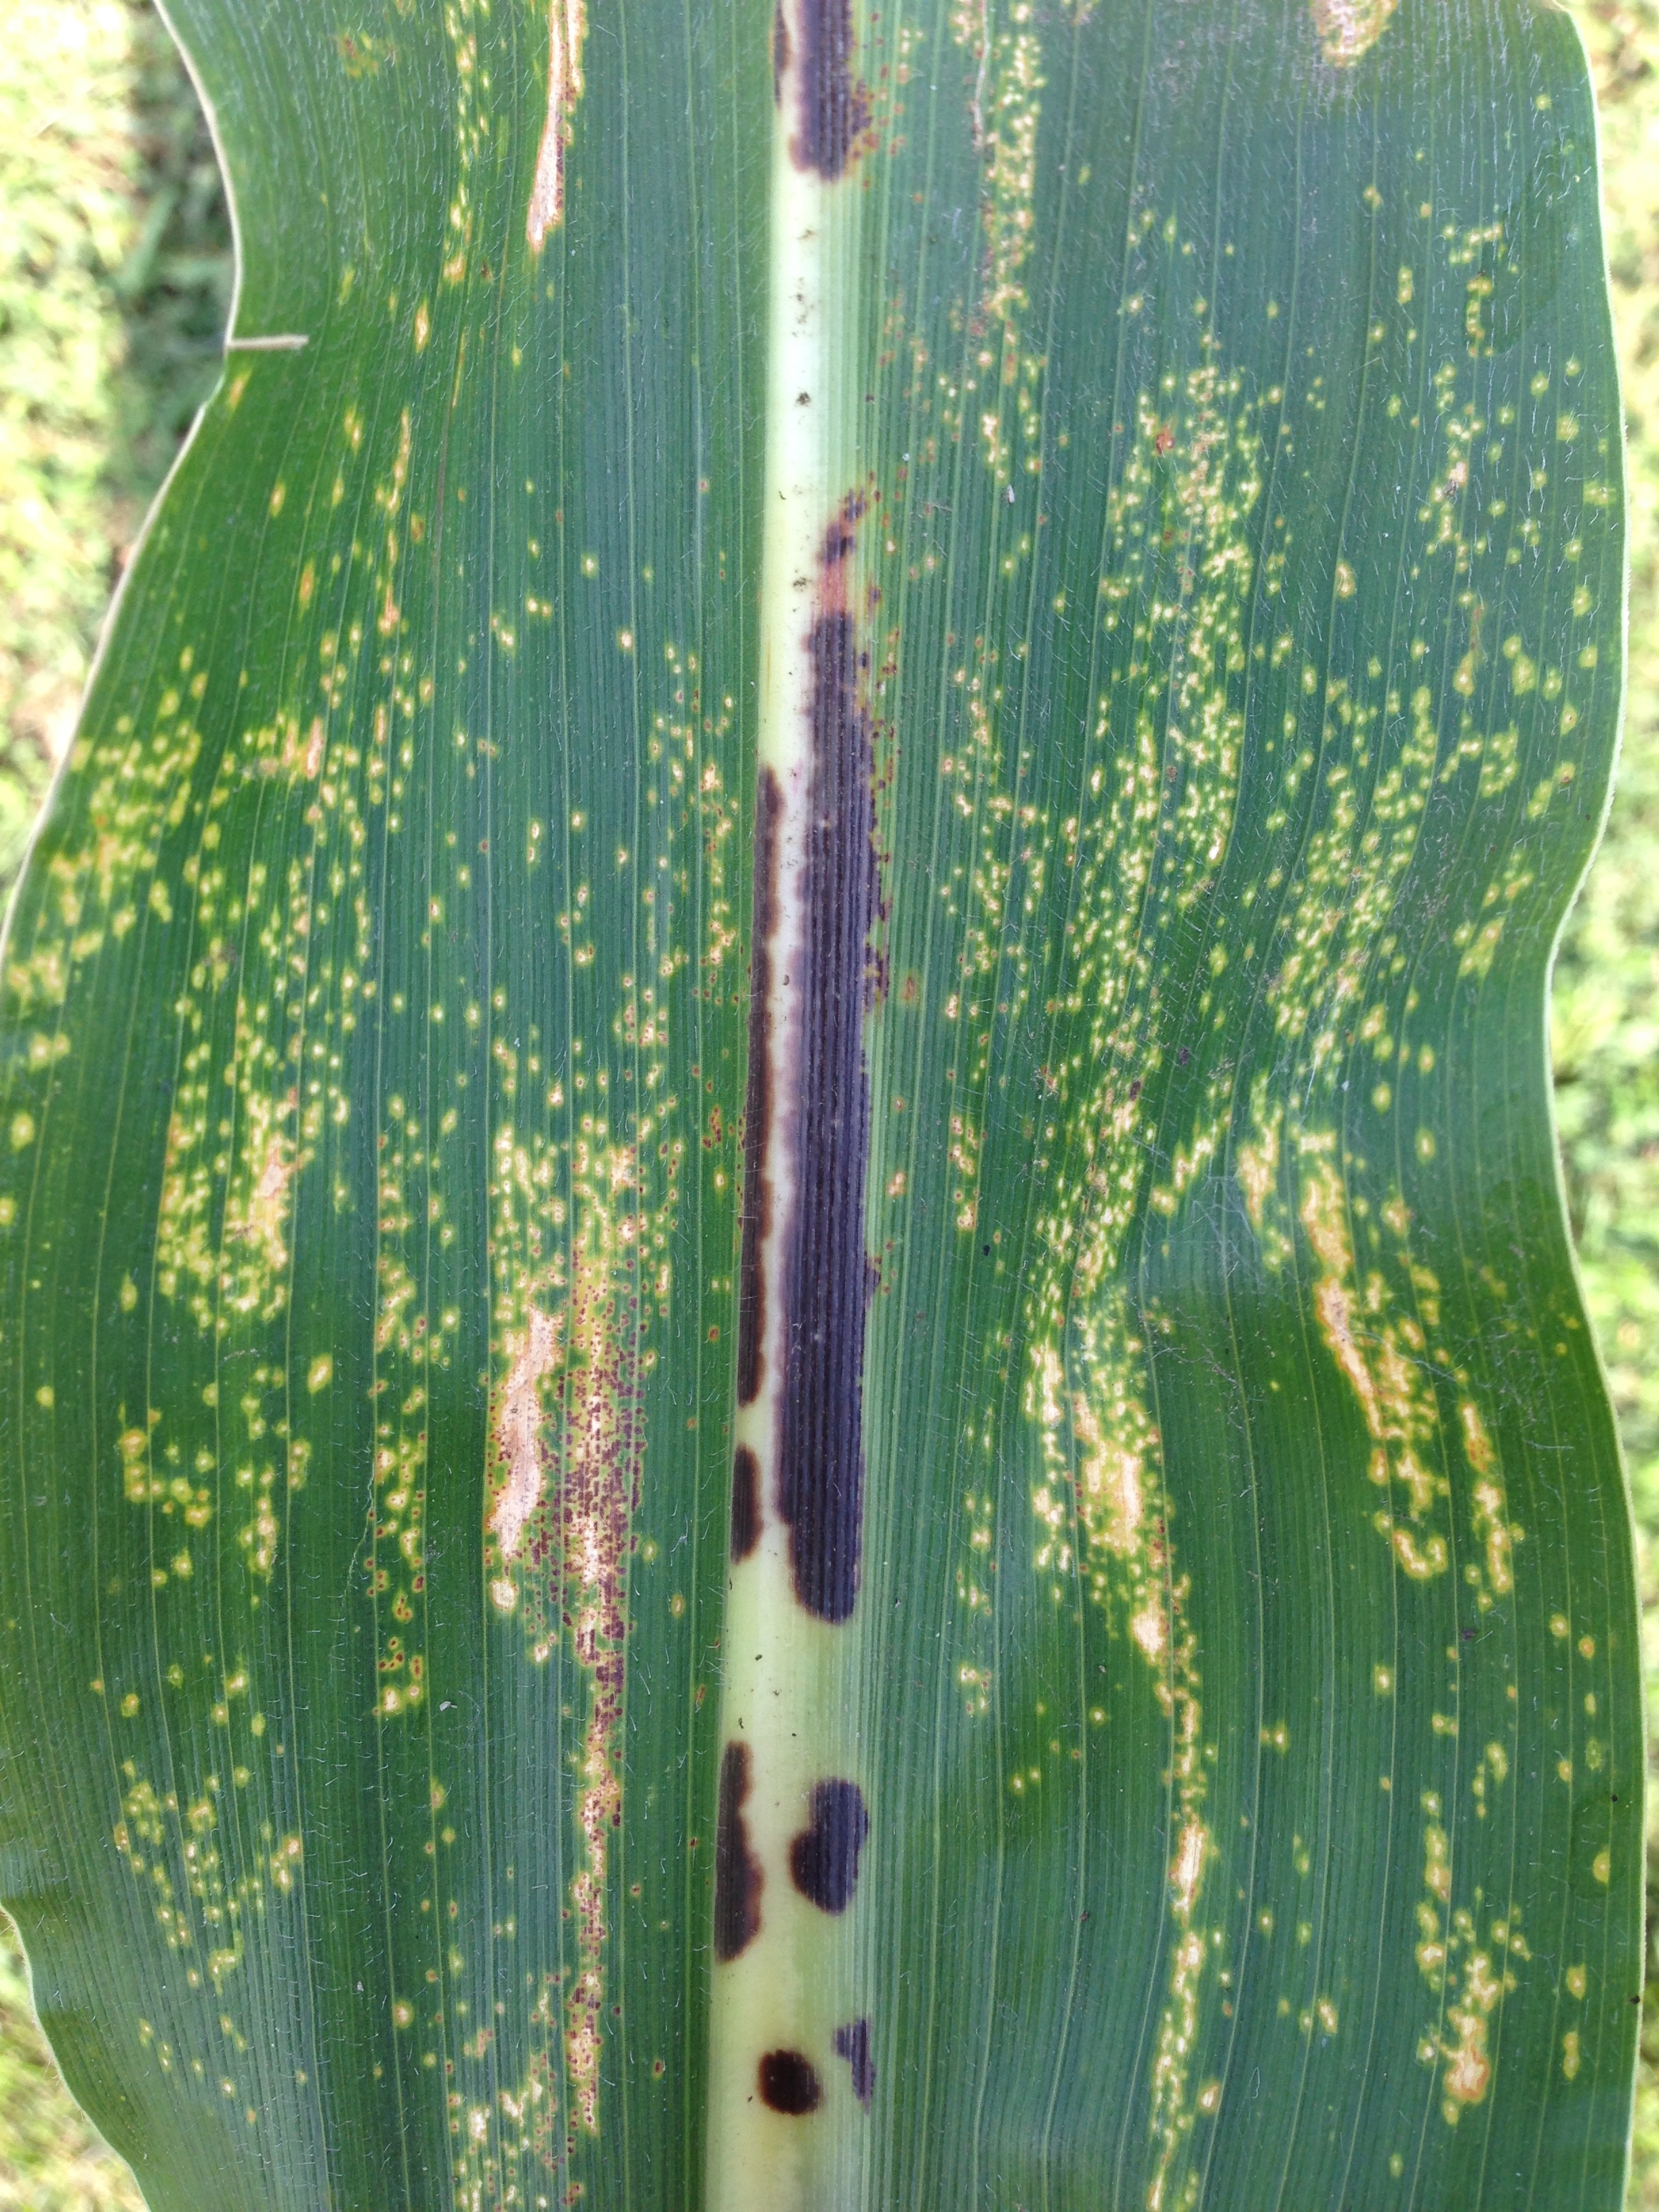 Physoderma brown spot leaf symptoms.